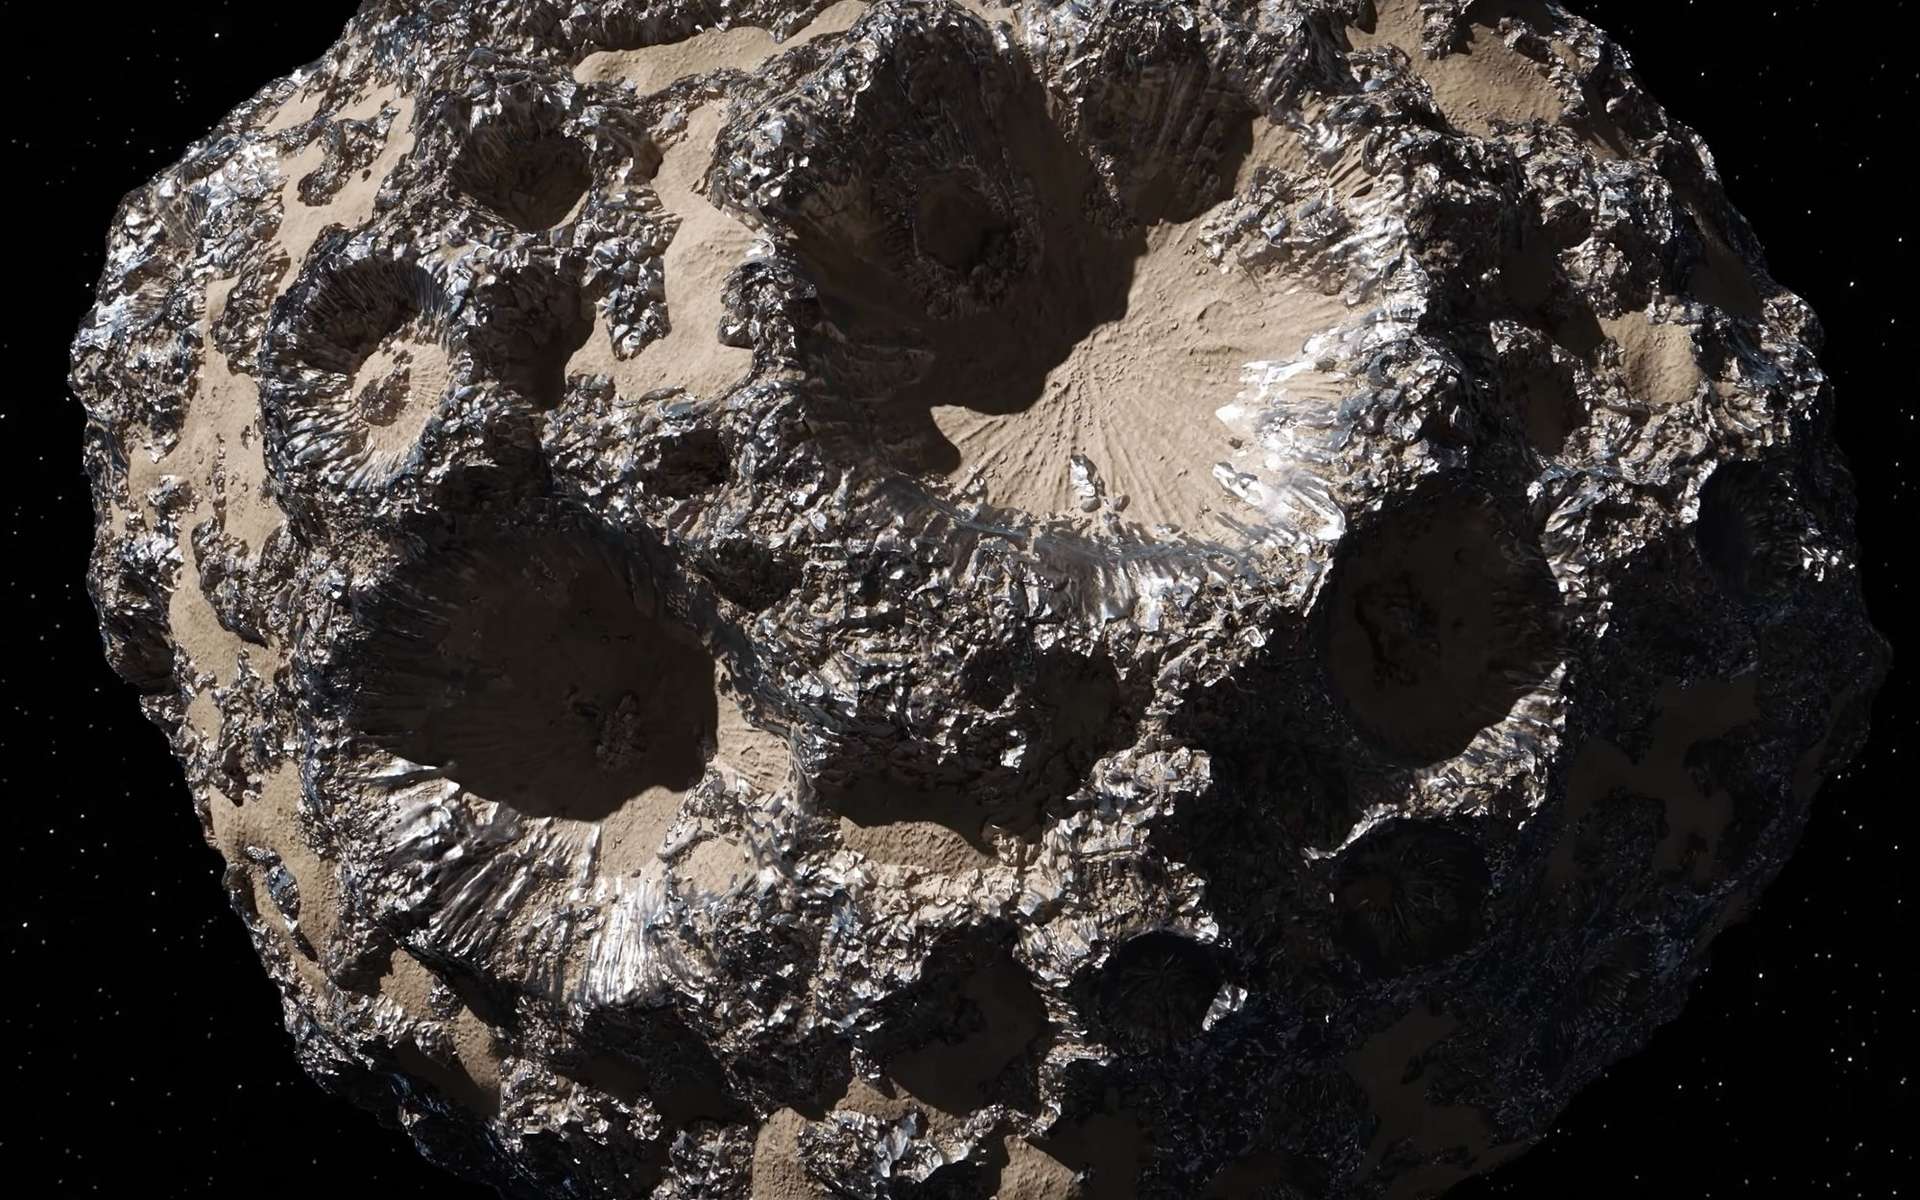 Vue d'artiste de l'astéroïde (16) Psyché. © Nasa, JPL-Caltech, ASU